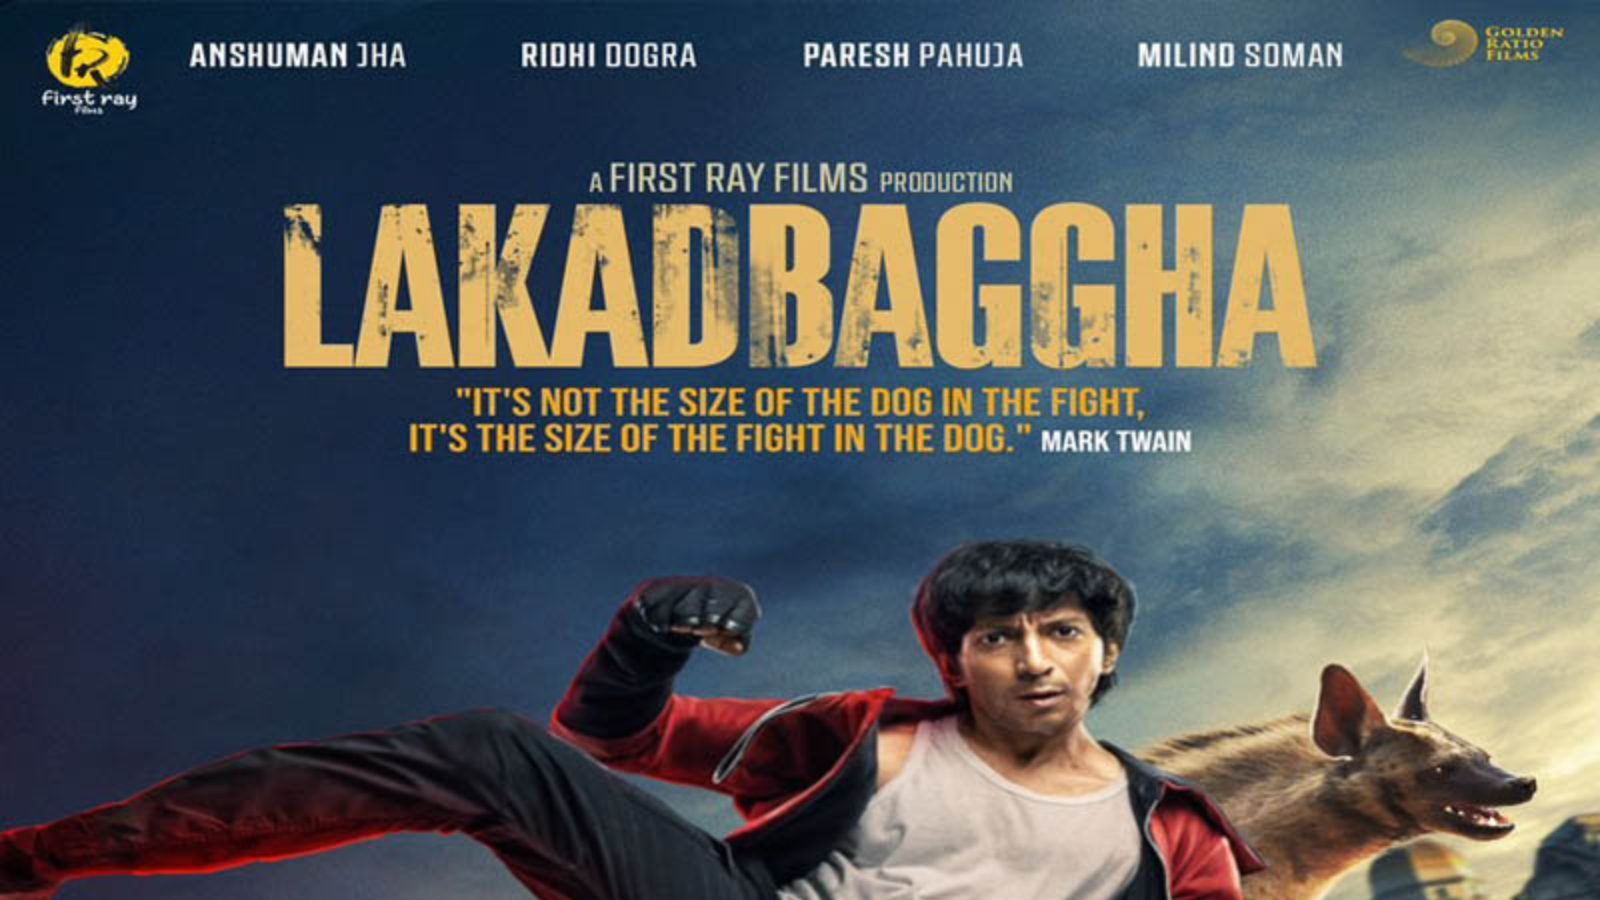 lakadbaggha movie review in hindi